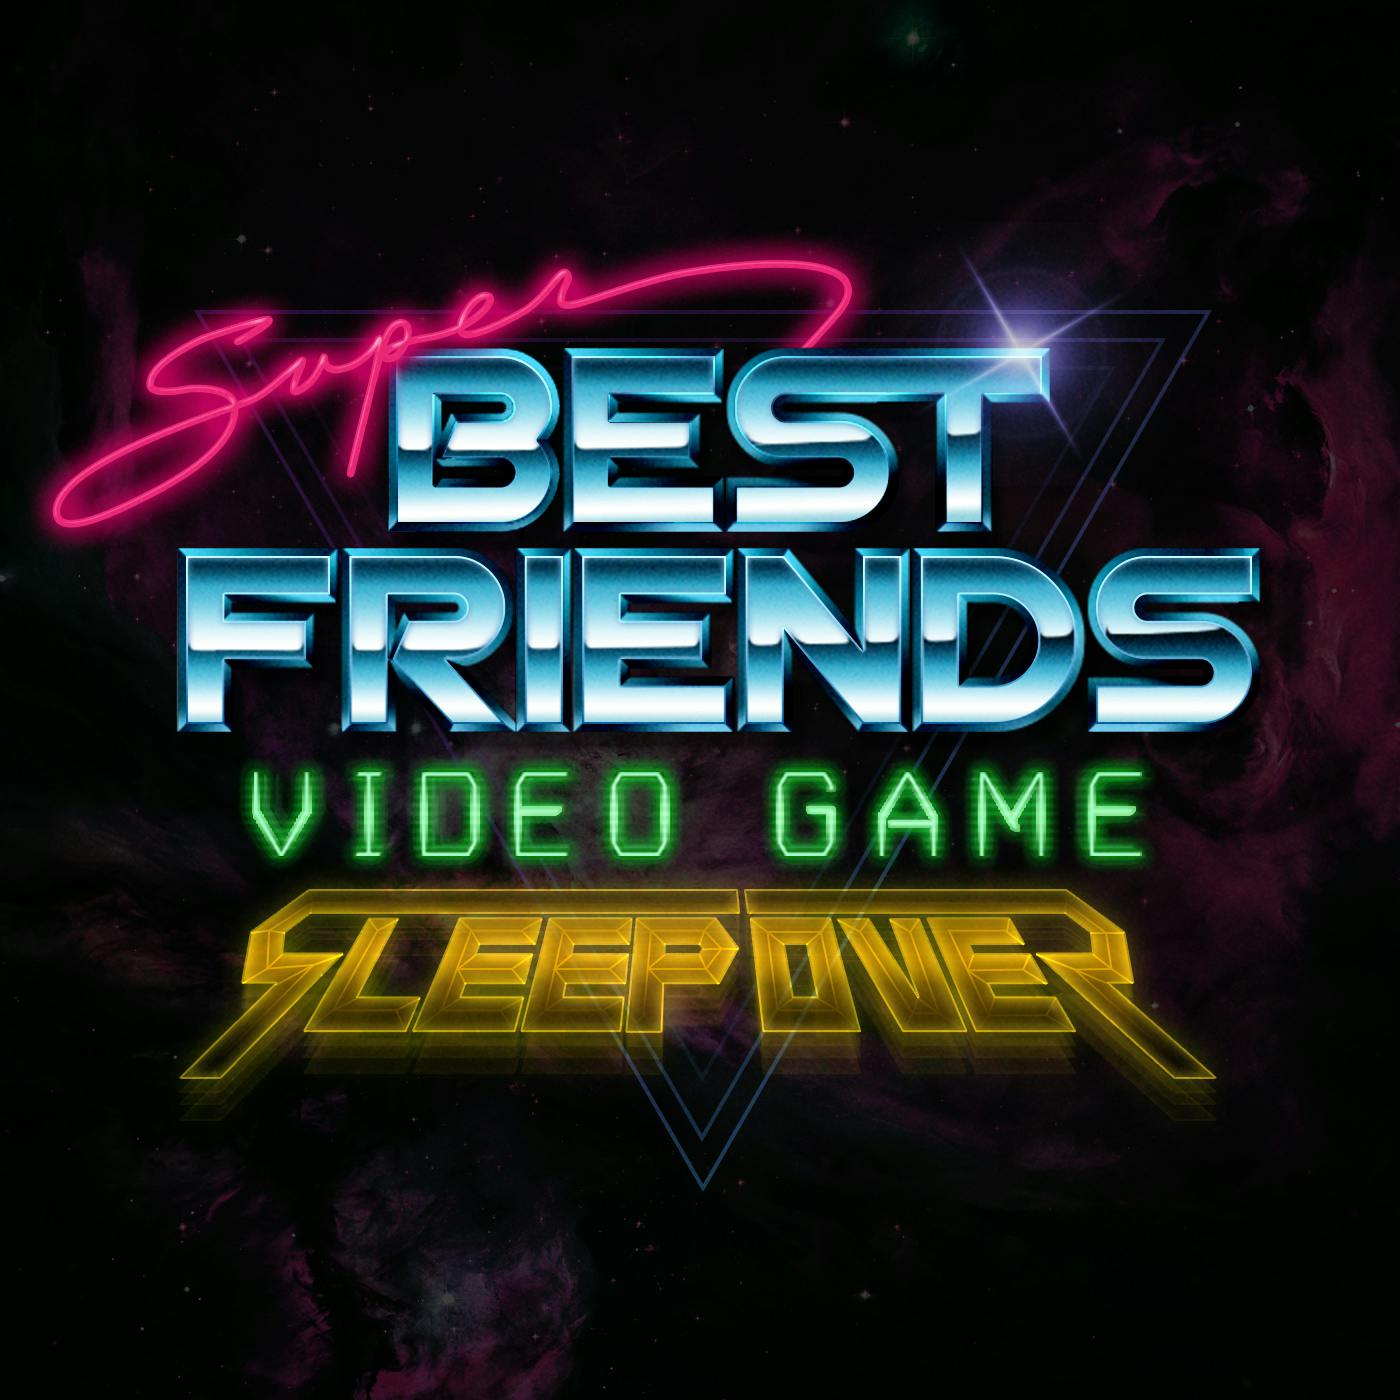 Super Best Friends Video Game Sleepover - Episode 56